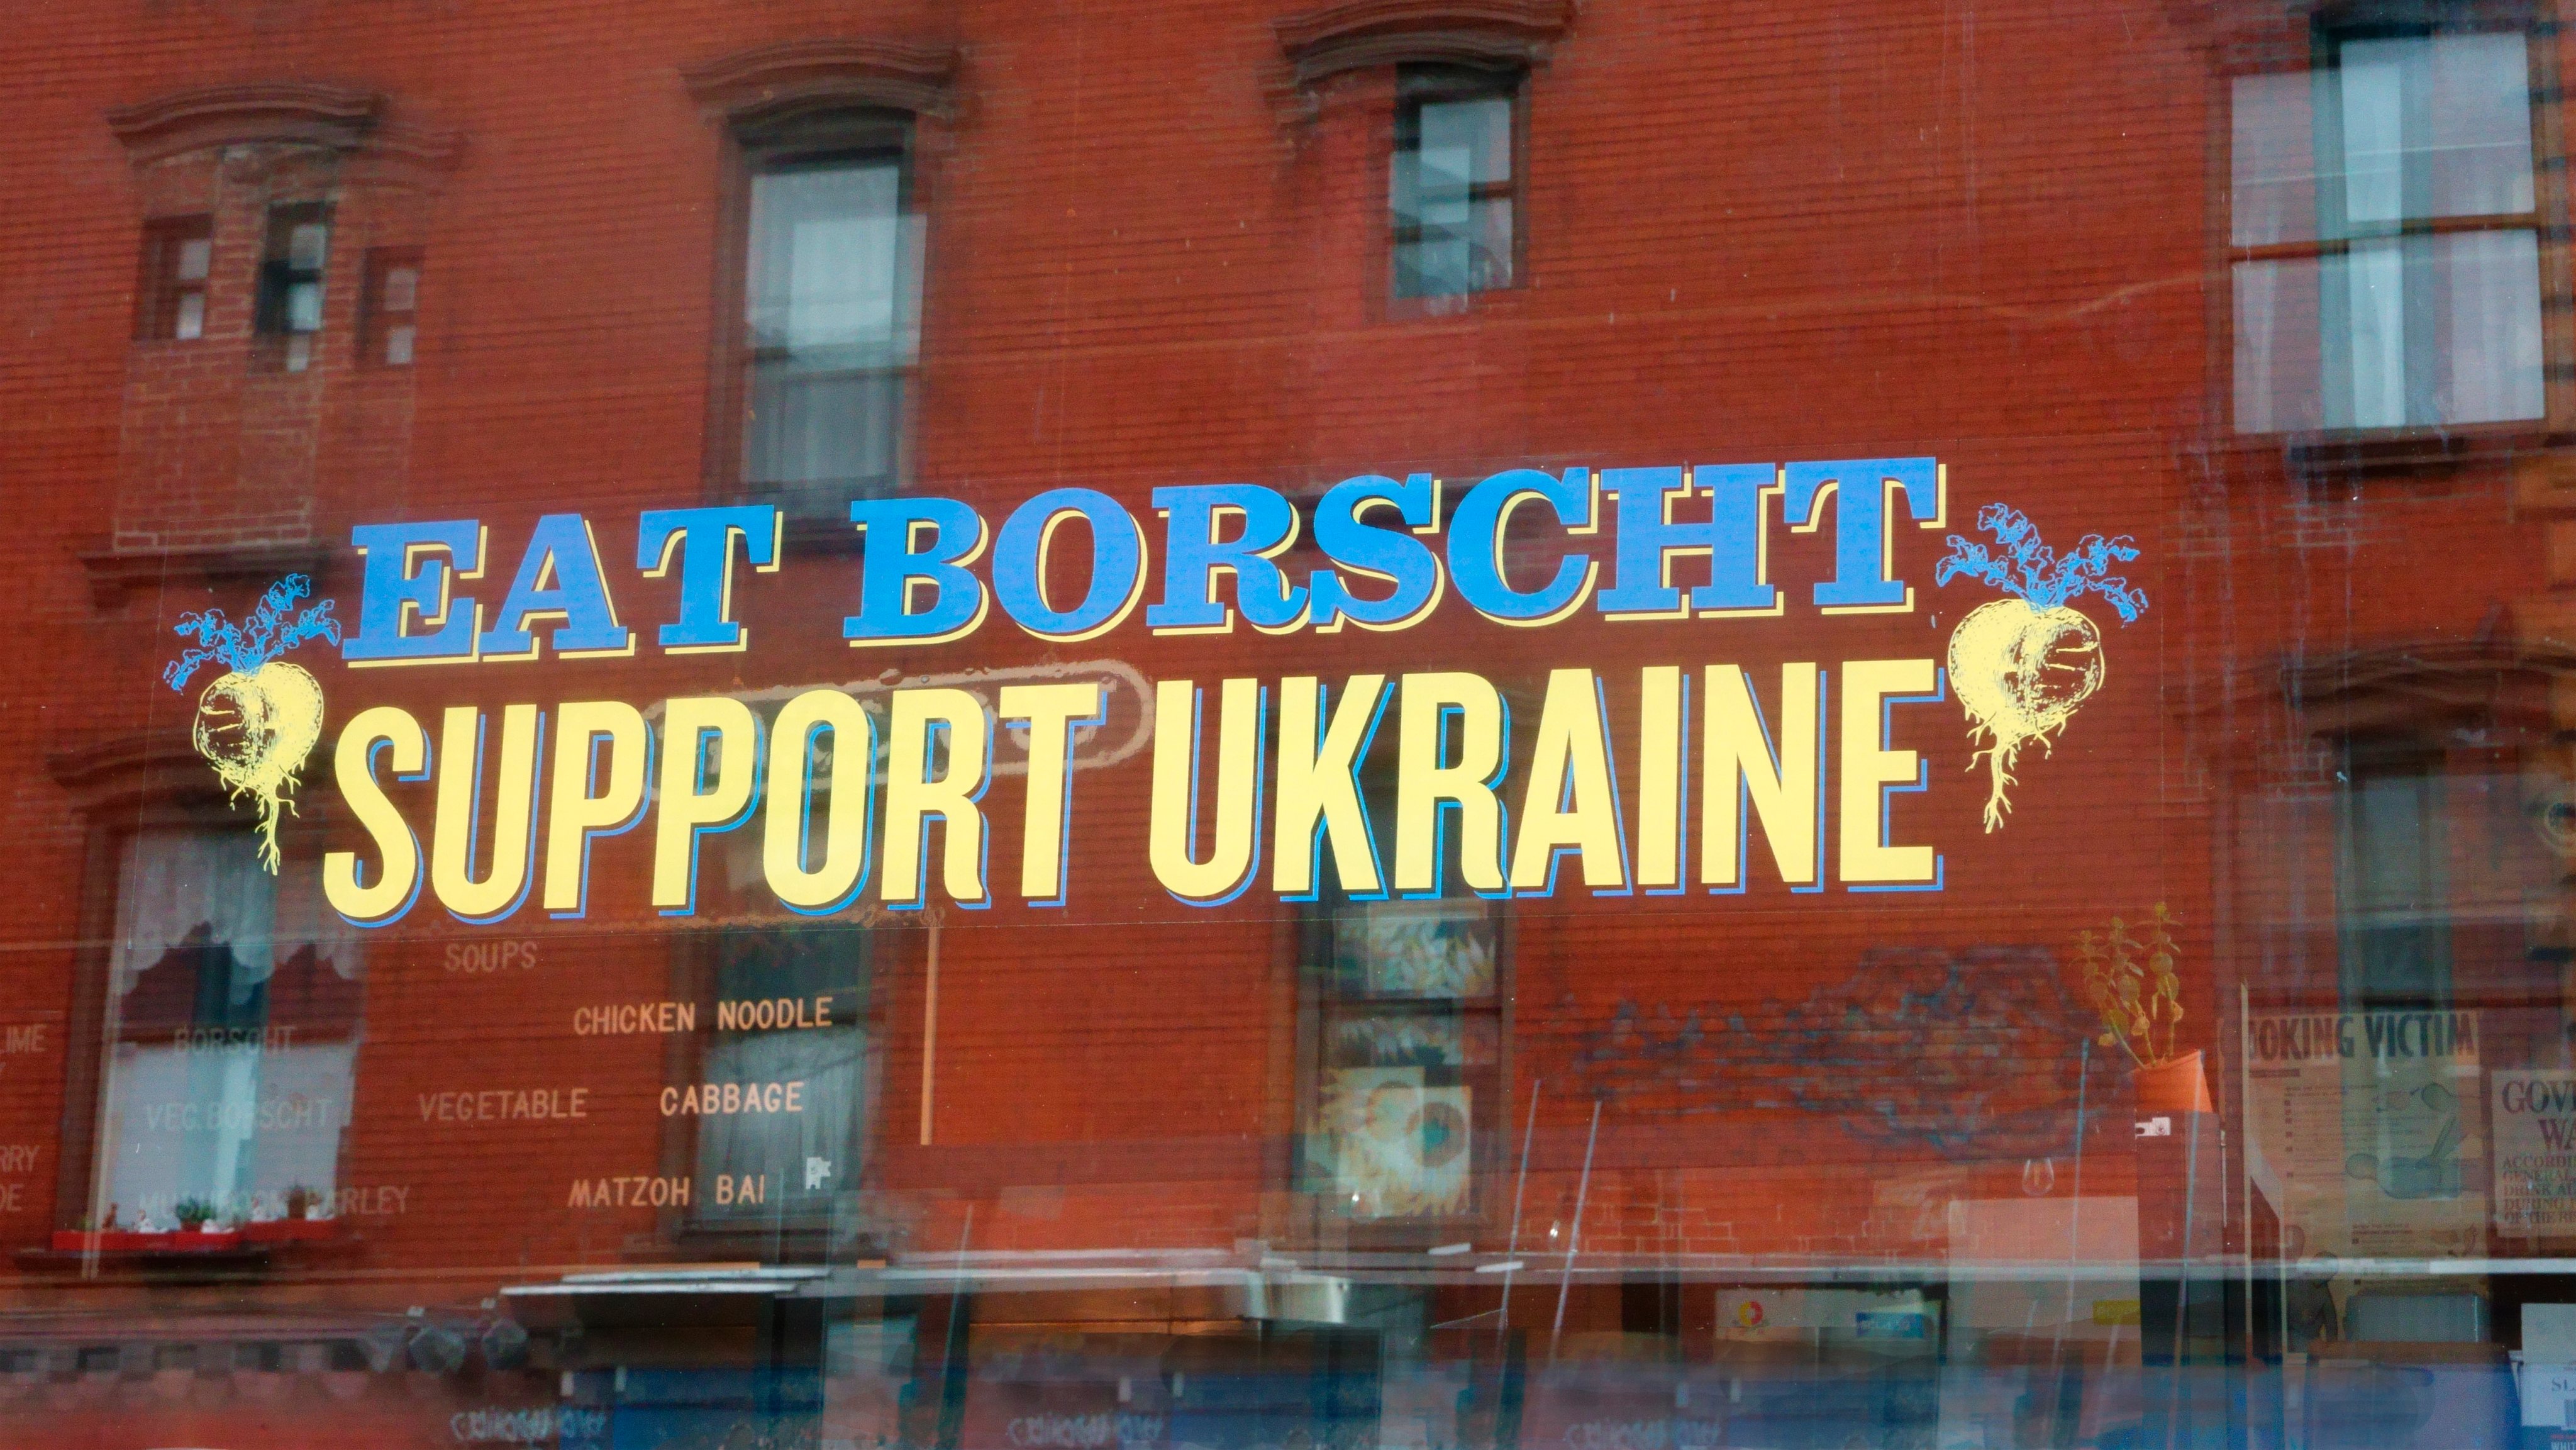 Message on window, Eat Borscht Support Ukraine, Veselka Ukrainian Restaurant, Second Avenue, New York City